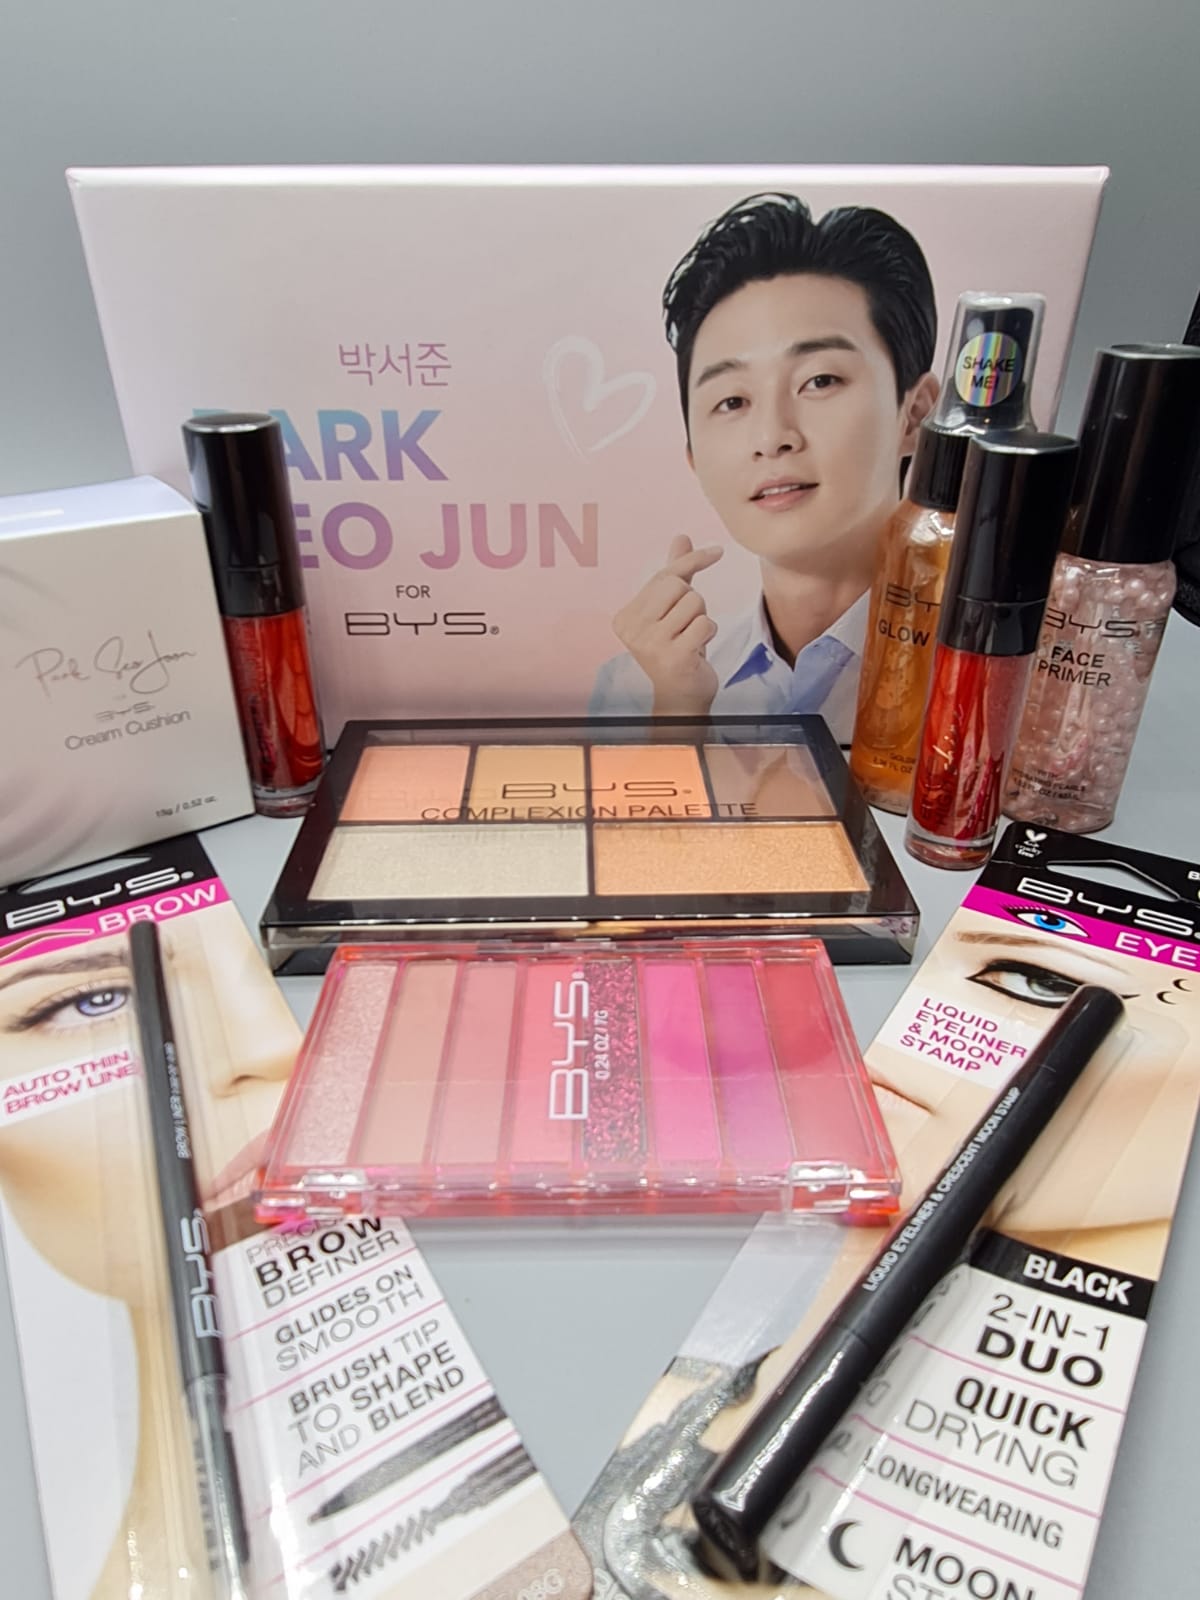 Park Seo Joon BYS Beauty Box - Limited Edition